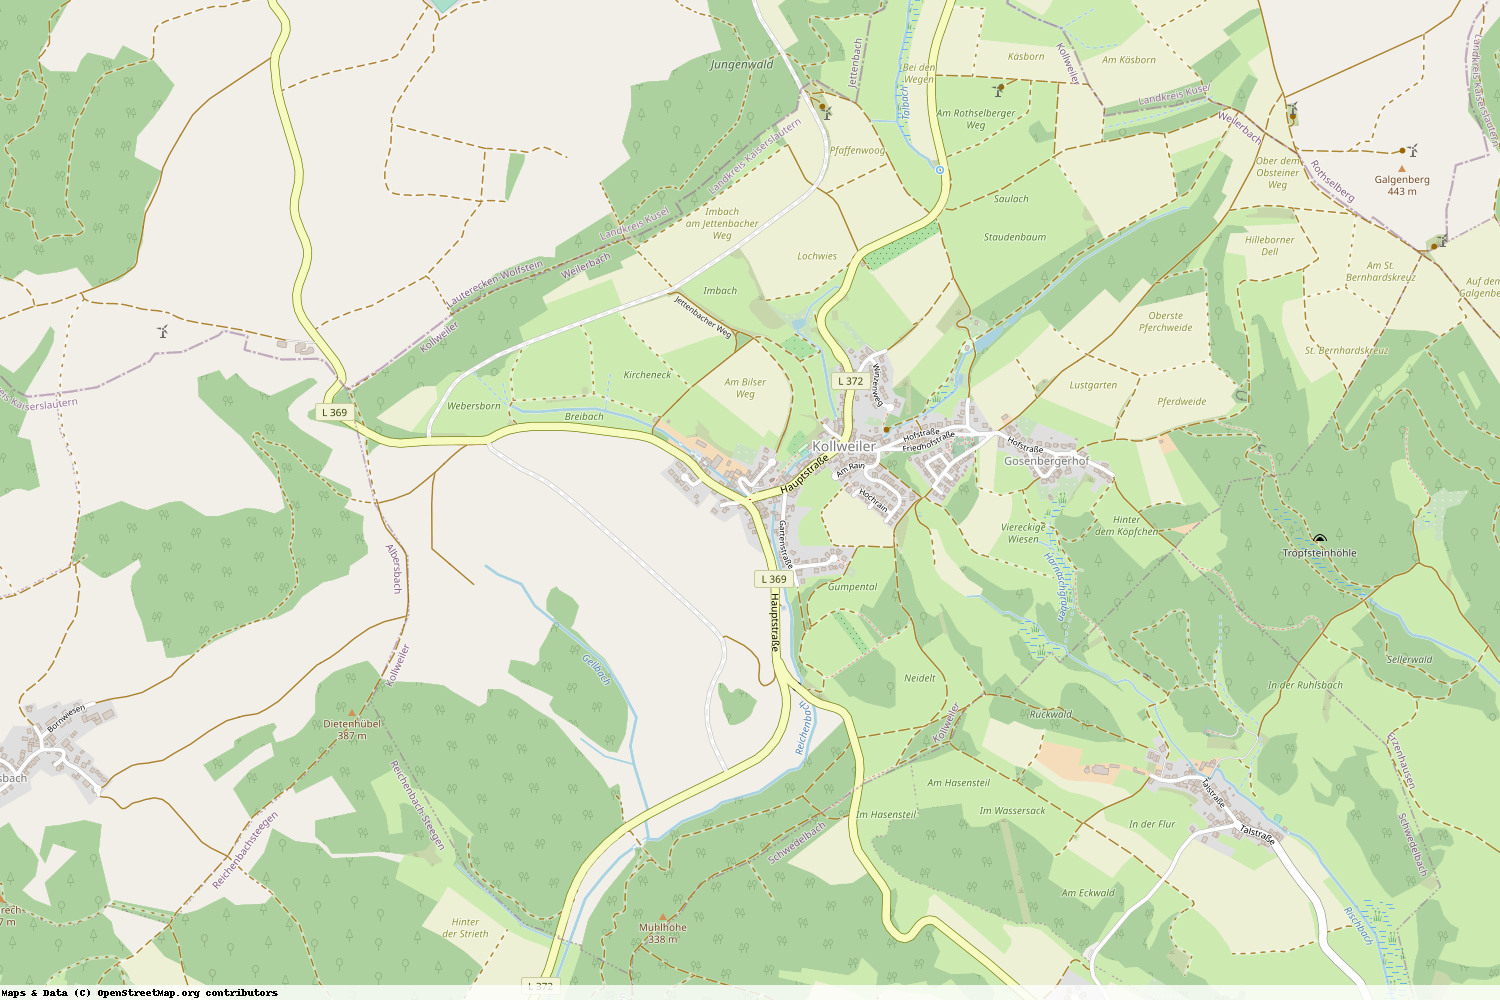 Ist gerade Stromausfall in Rheinland-Pfalz - Kaiserslautern - Kollweiler?